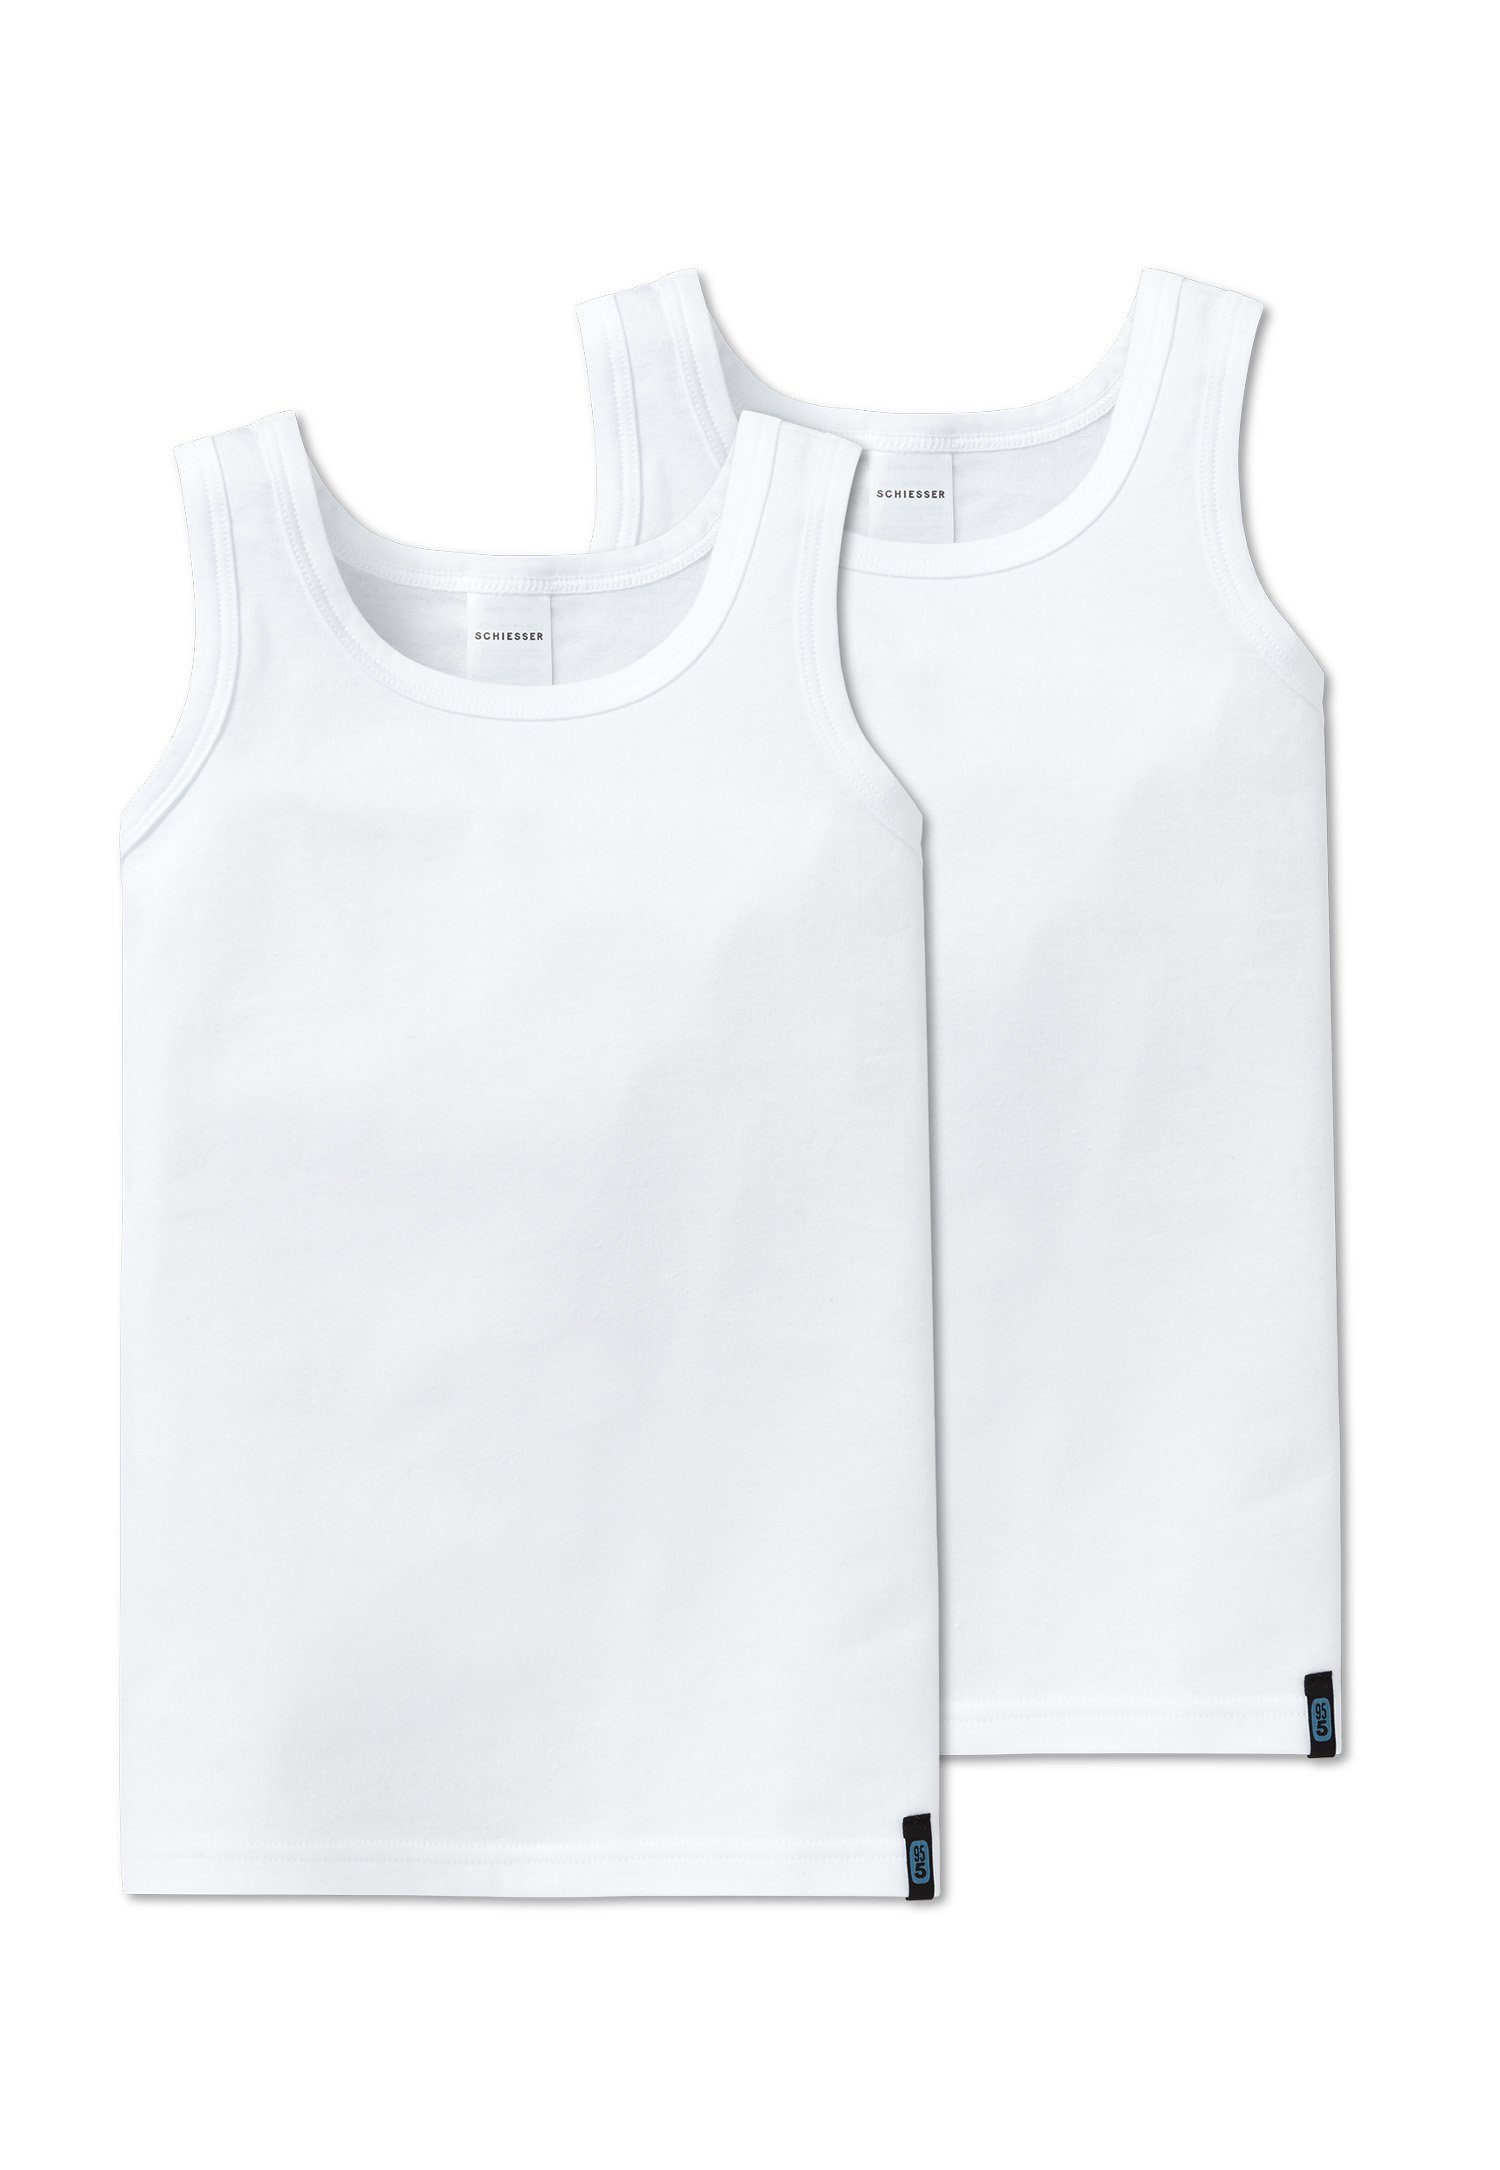 Schiesser Unterhemd Cotton 95/5 (Set, 2-St., 2er-Pack) Jungen Unterhemd, Tank Top, Baumwolle weiss